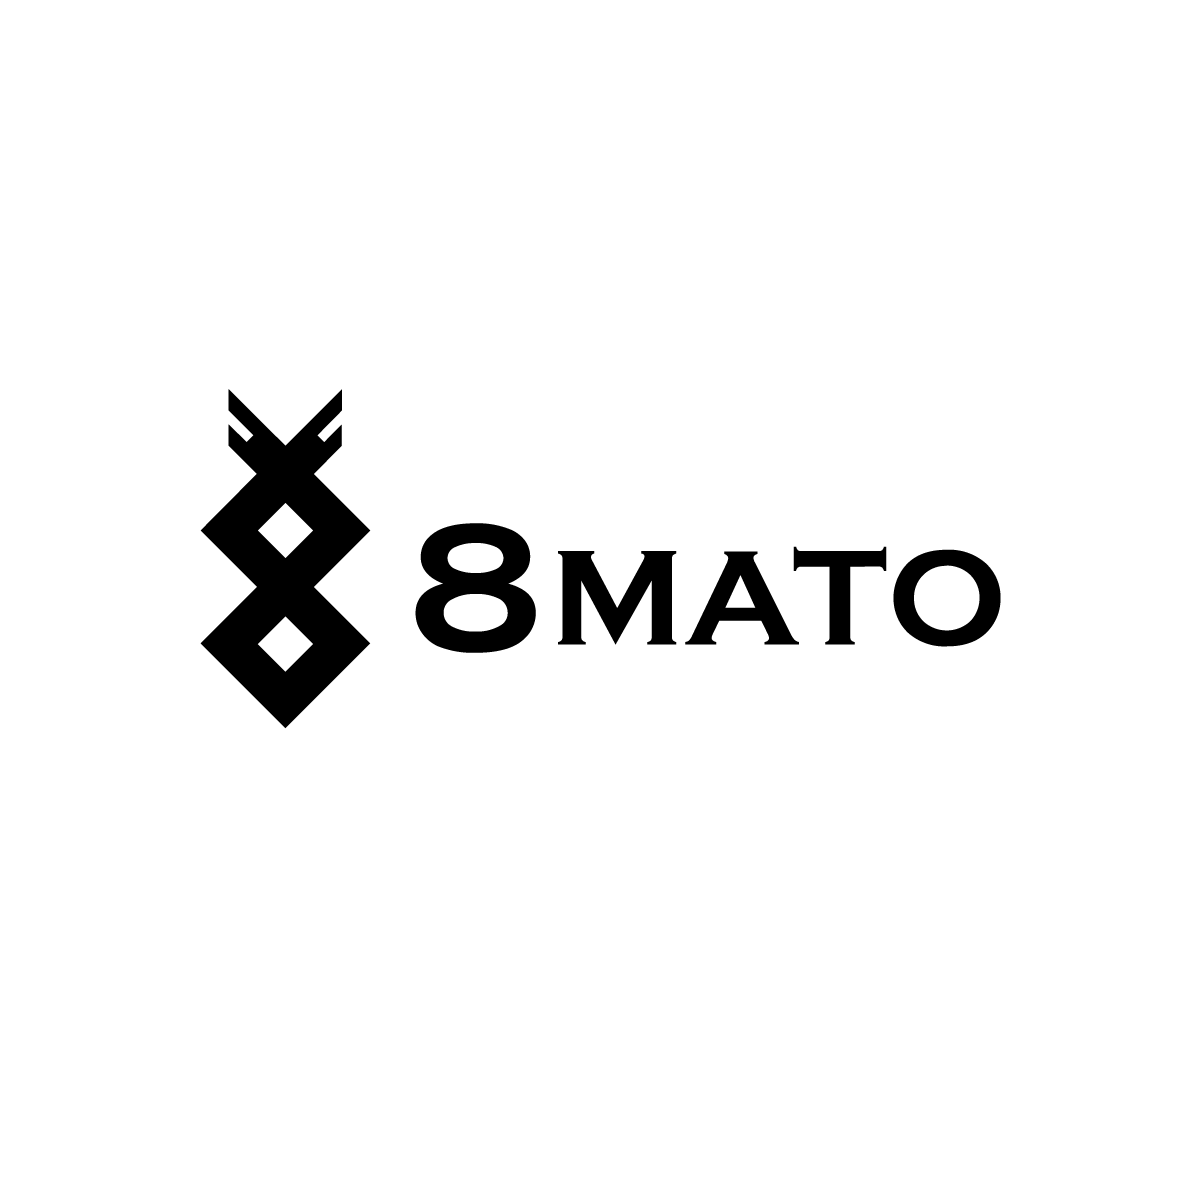 8MATO logo